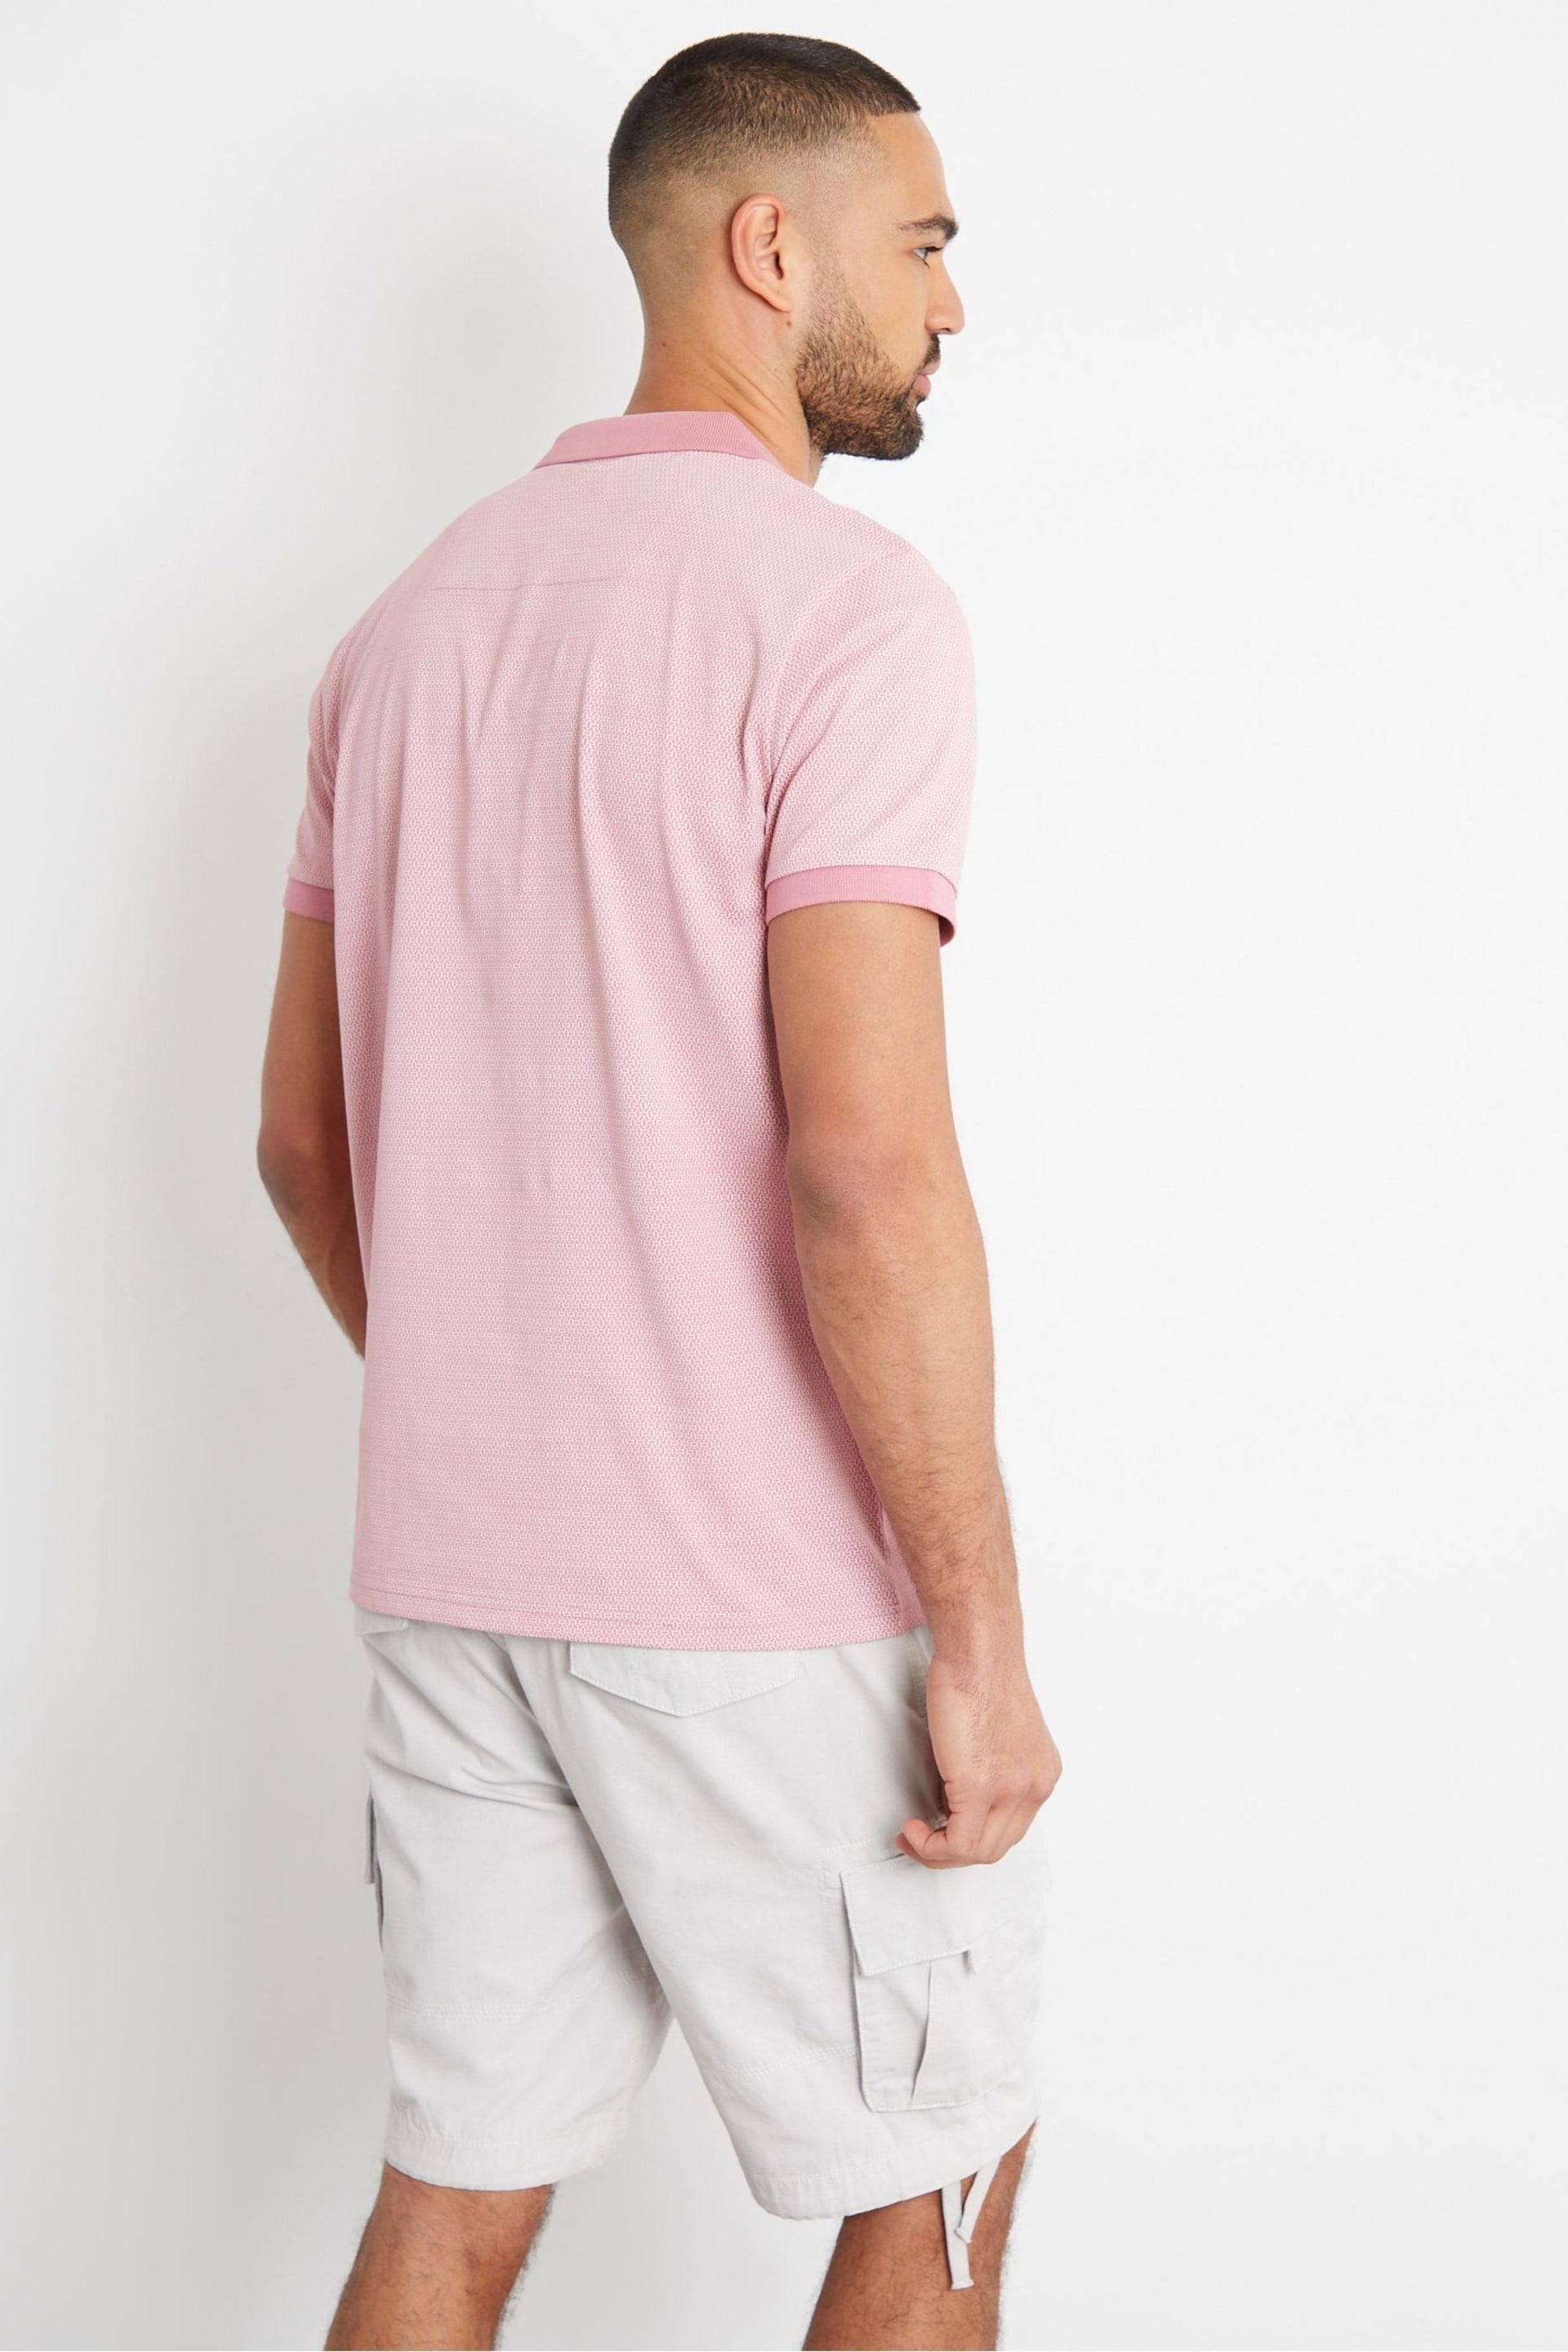 Threadbare Pink Geometric Print Zip Collar Cotton Jersey Polo Shirt - Image 2 of 4